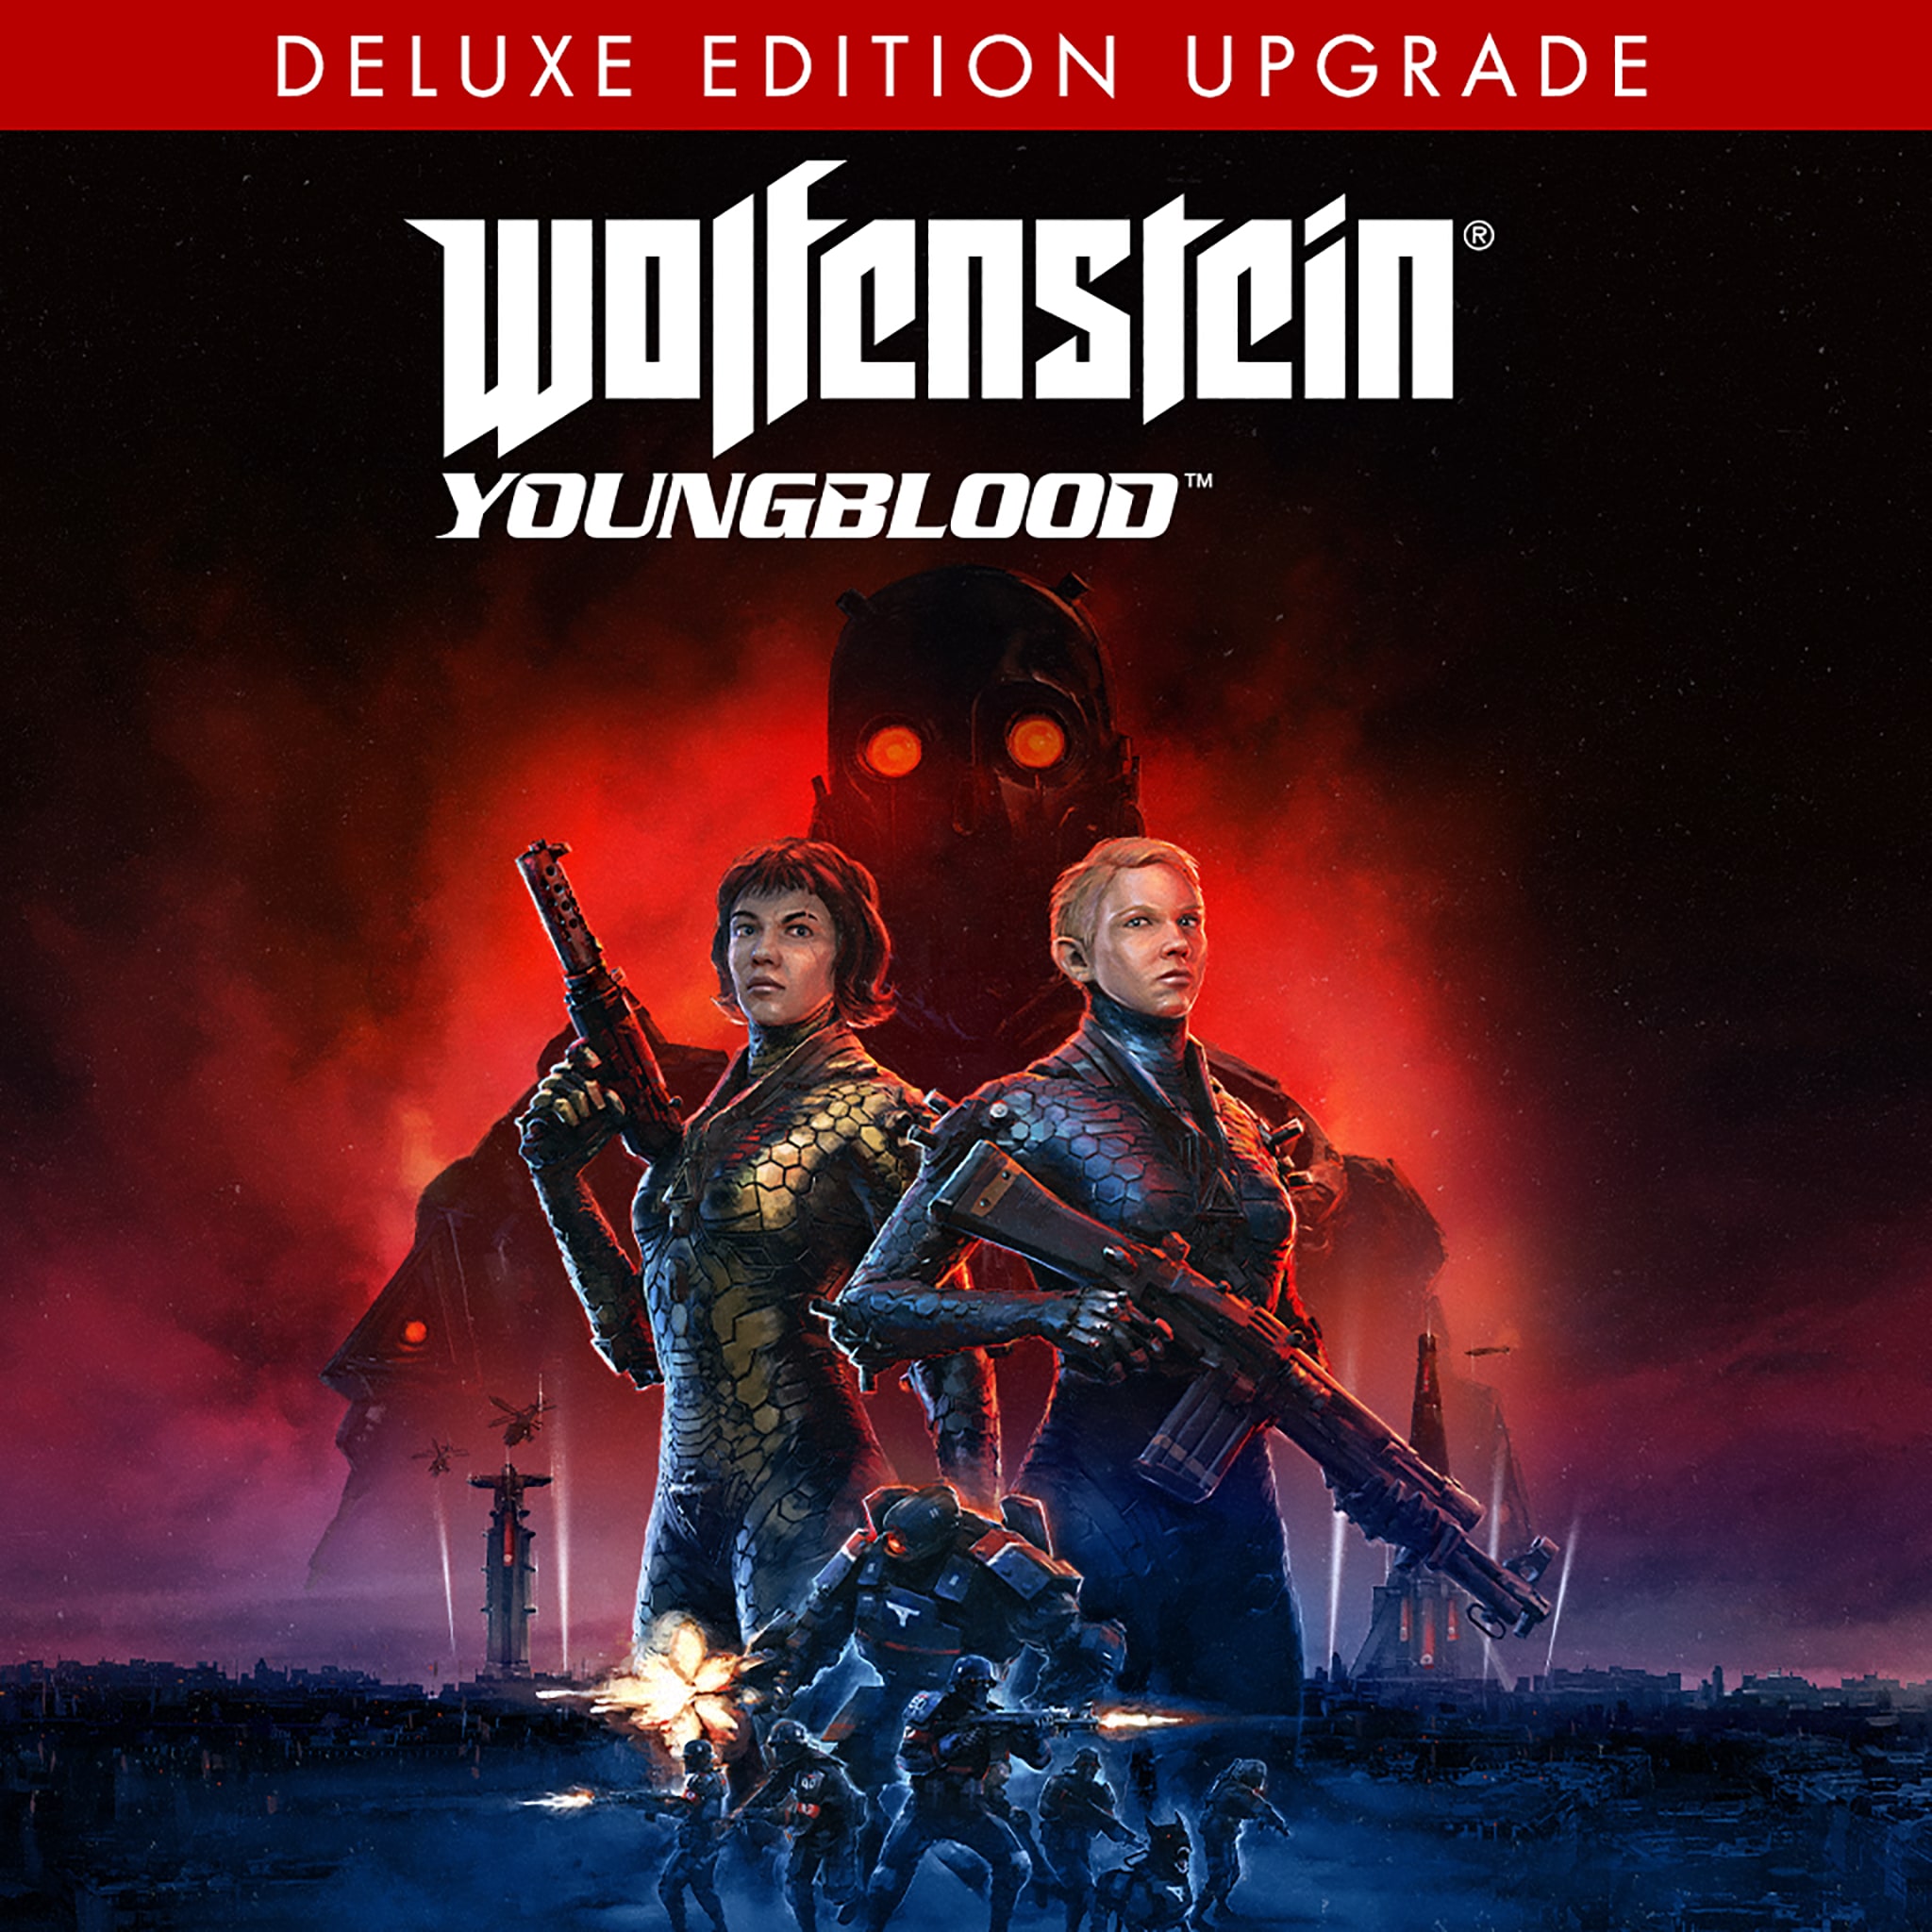 Wolfenstein: Youngblood Deluxe Upgrade